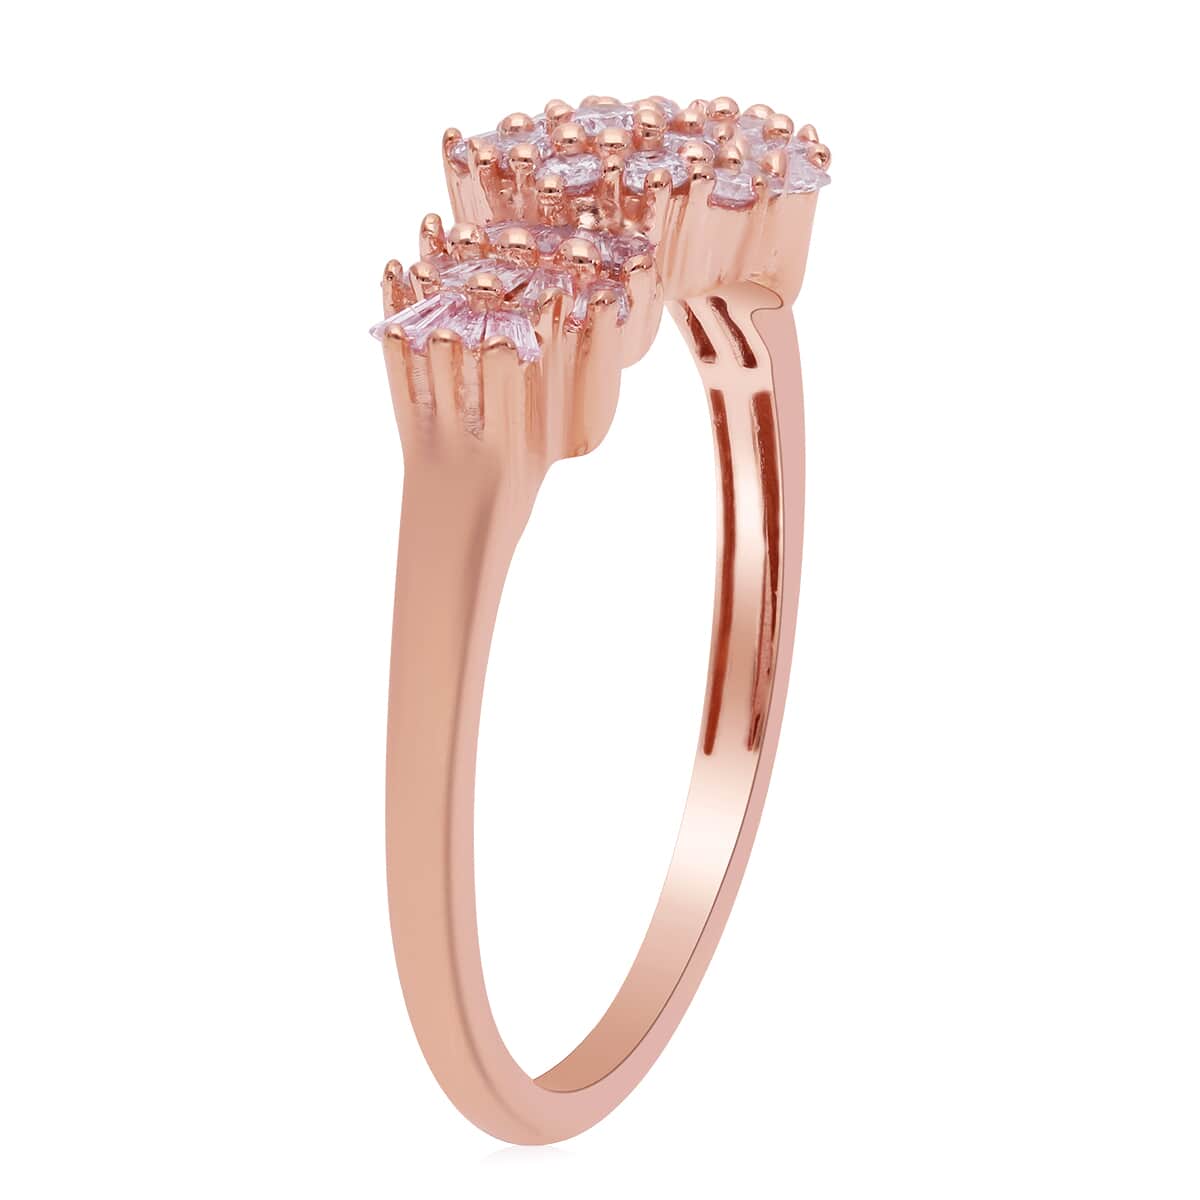 LUXORO 10K Rose Gold Natural Pink Diamond I3 Ring (Size 10.0) 3 Grams 0.50 ctw image number 3